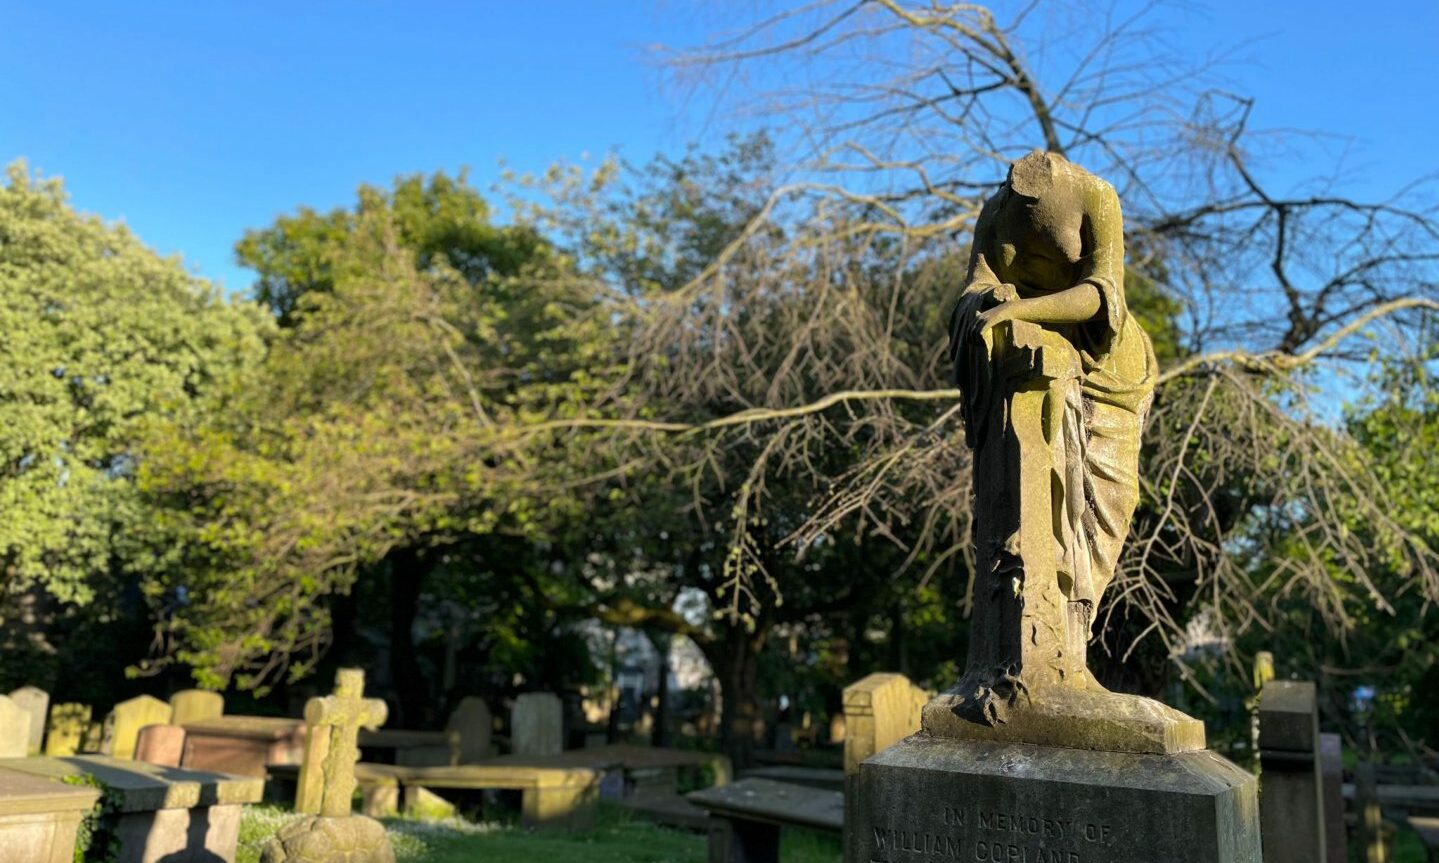 Statue inside St Nicholas graveyard in Aberdeen.